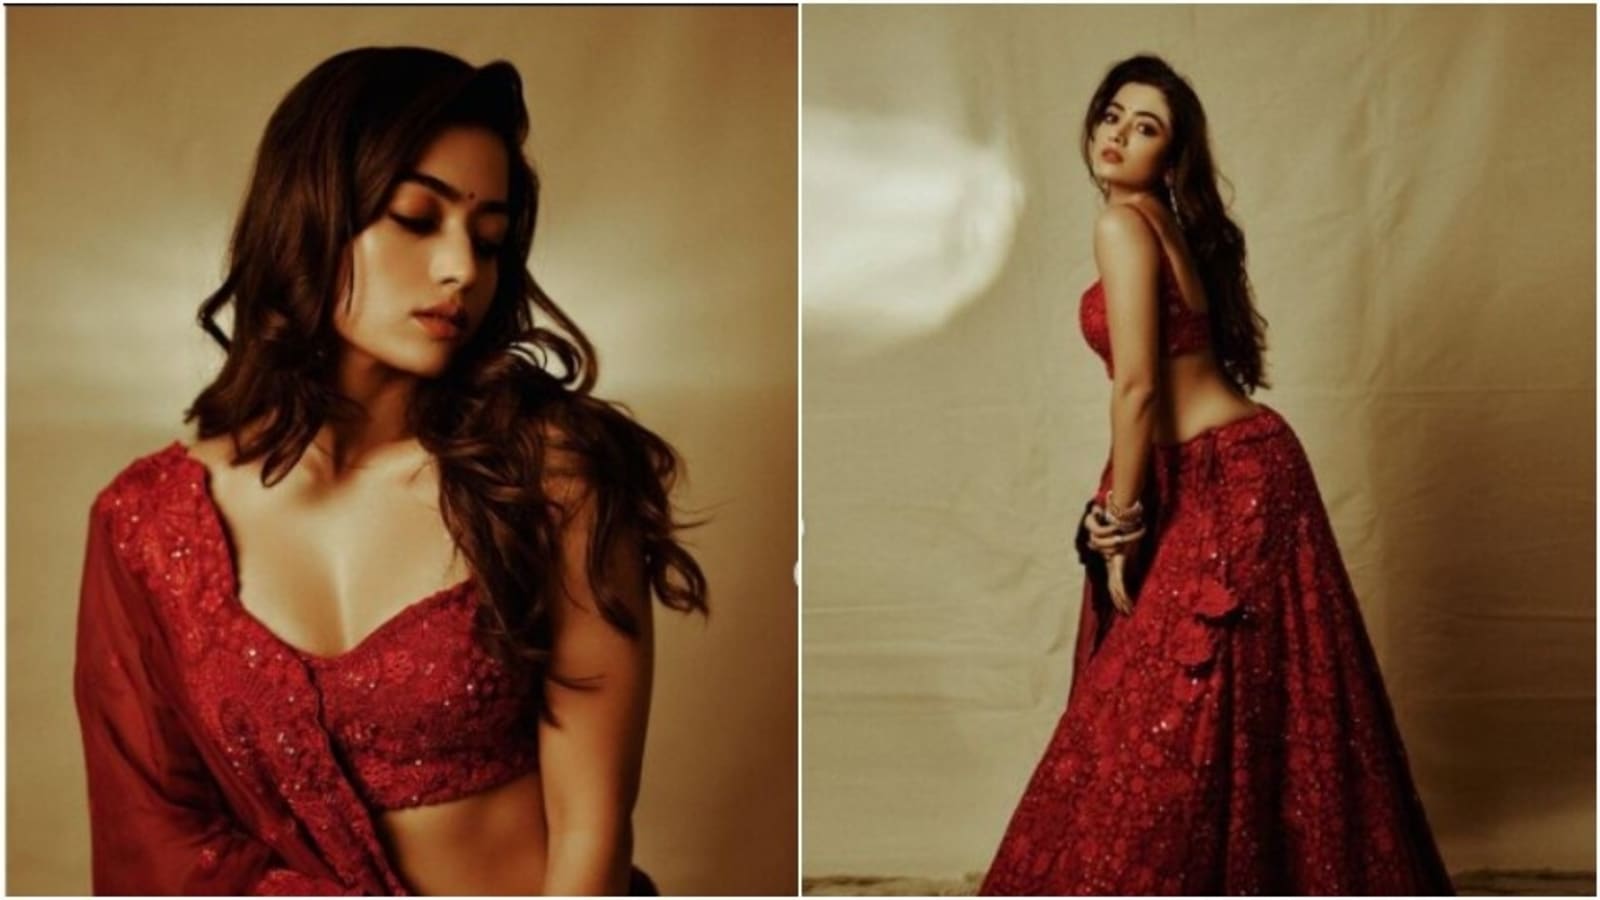 Rashmika Mandanna sizzles in a red lehenga. Fans call her ‘hot’